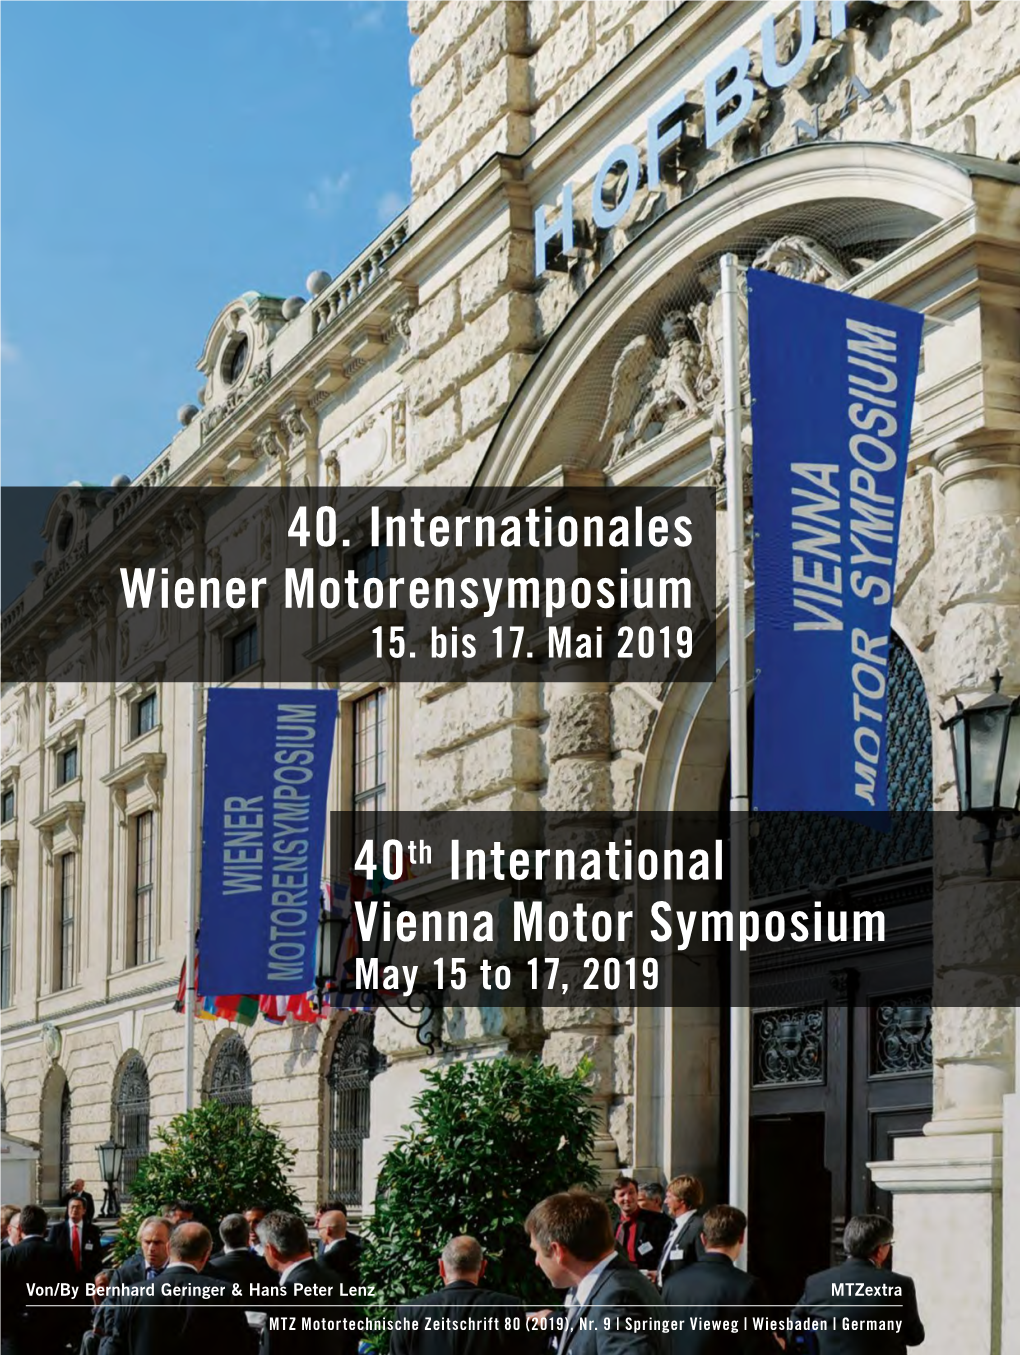 40Th International Vienna Motor Symposium May 15 to 17, 2019